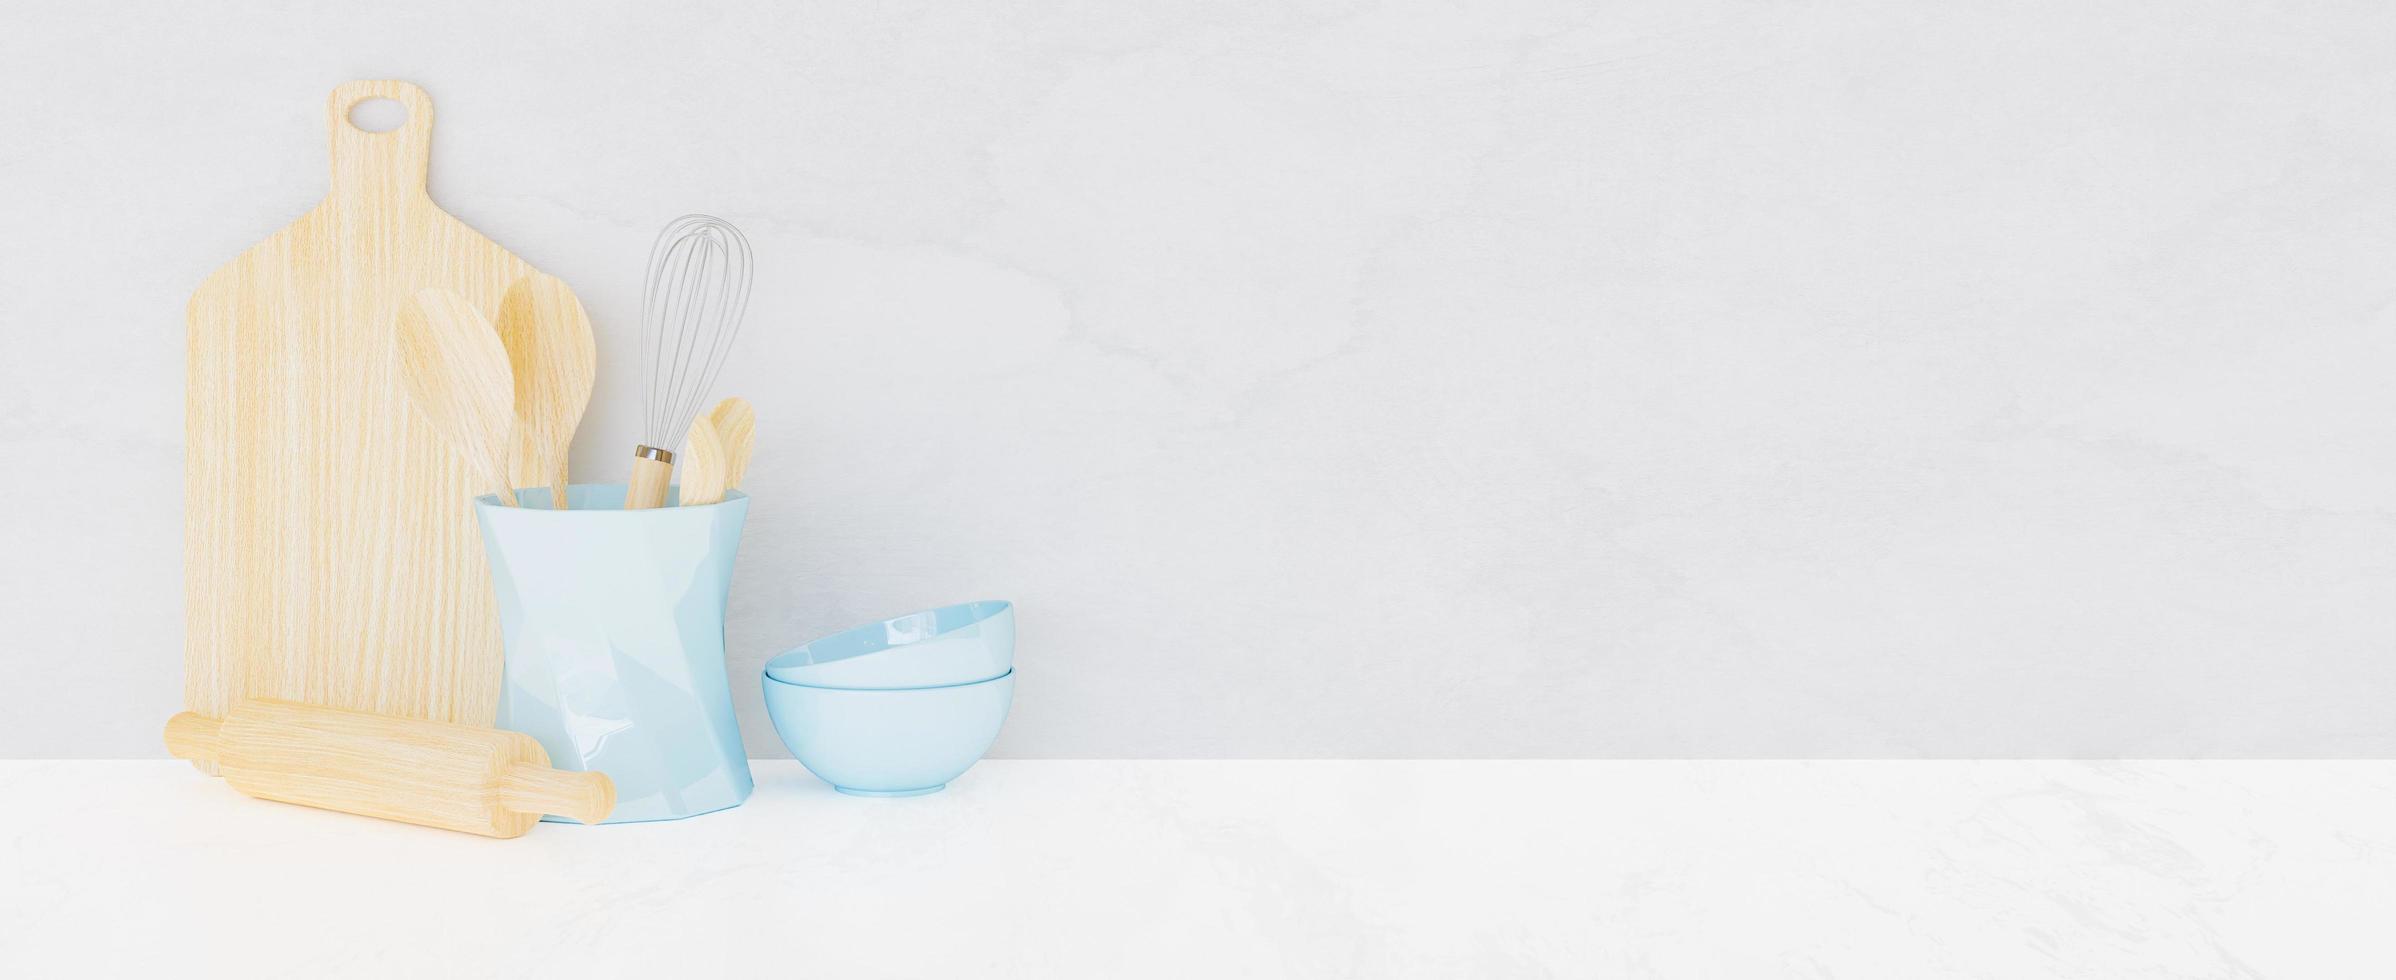 Kitchen utensils with pastel blue ceramic bowls, 3d rendering photo